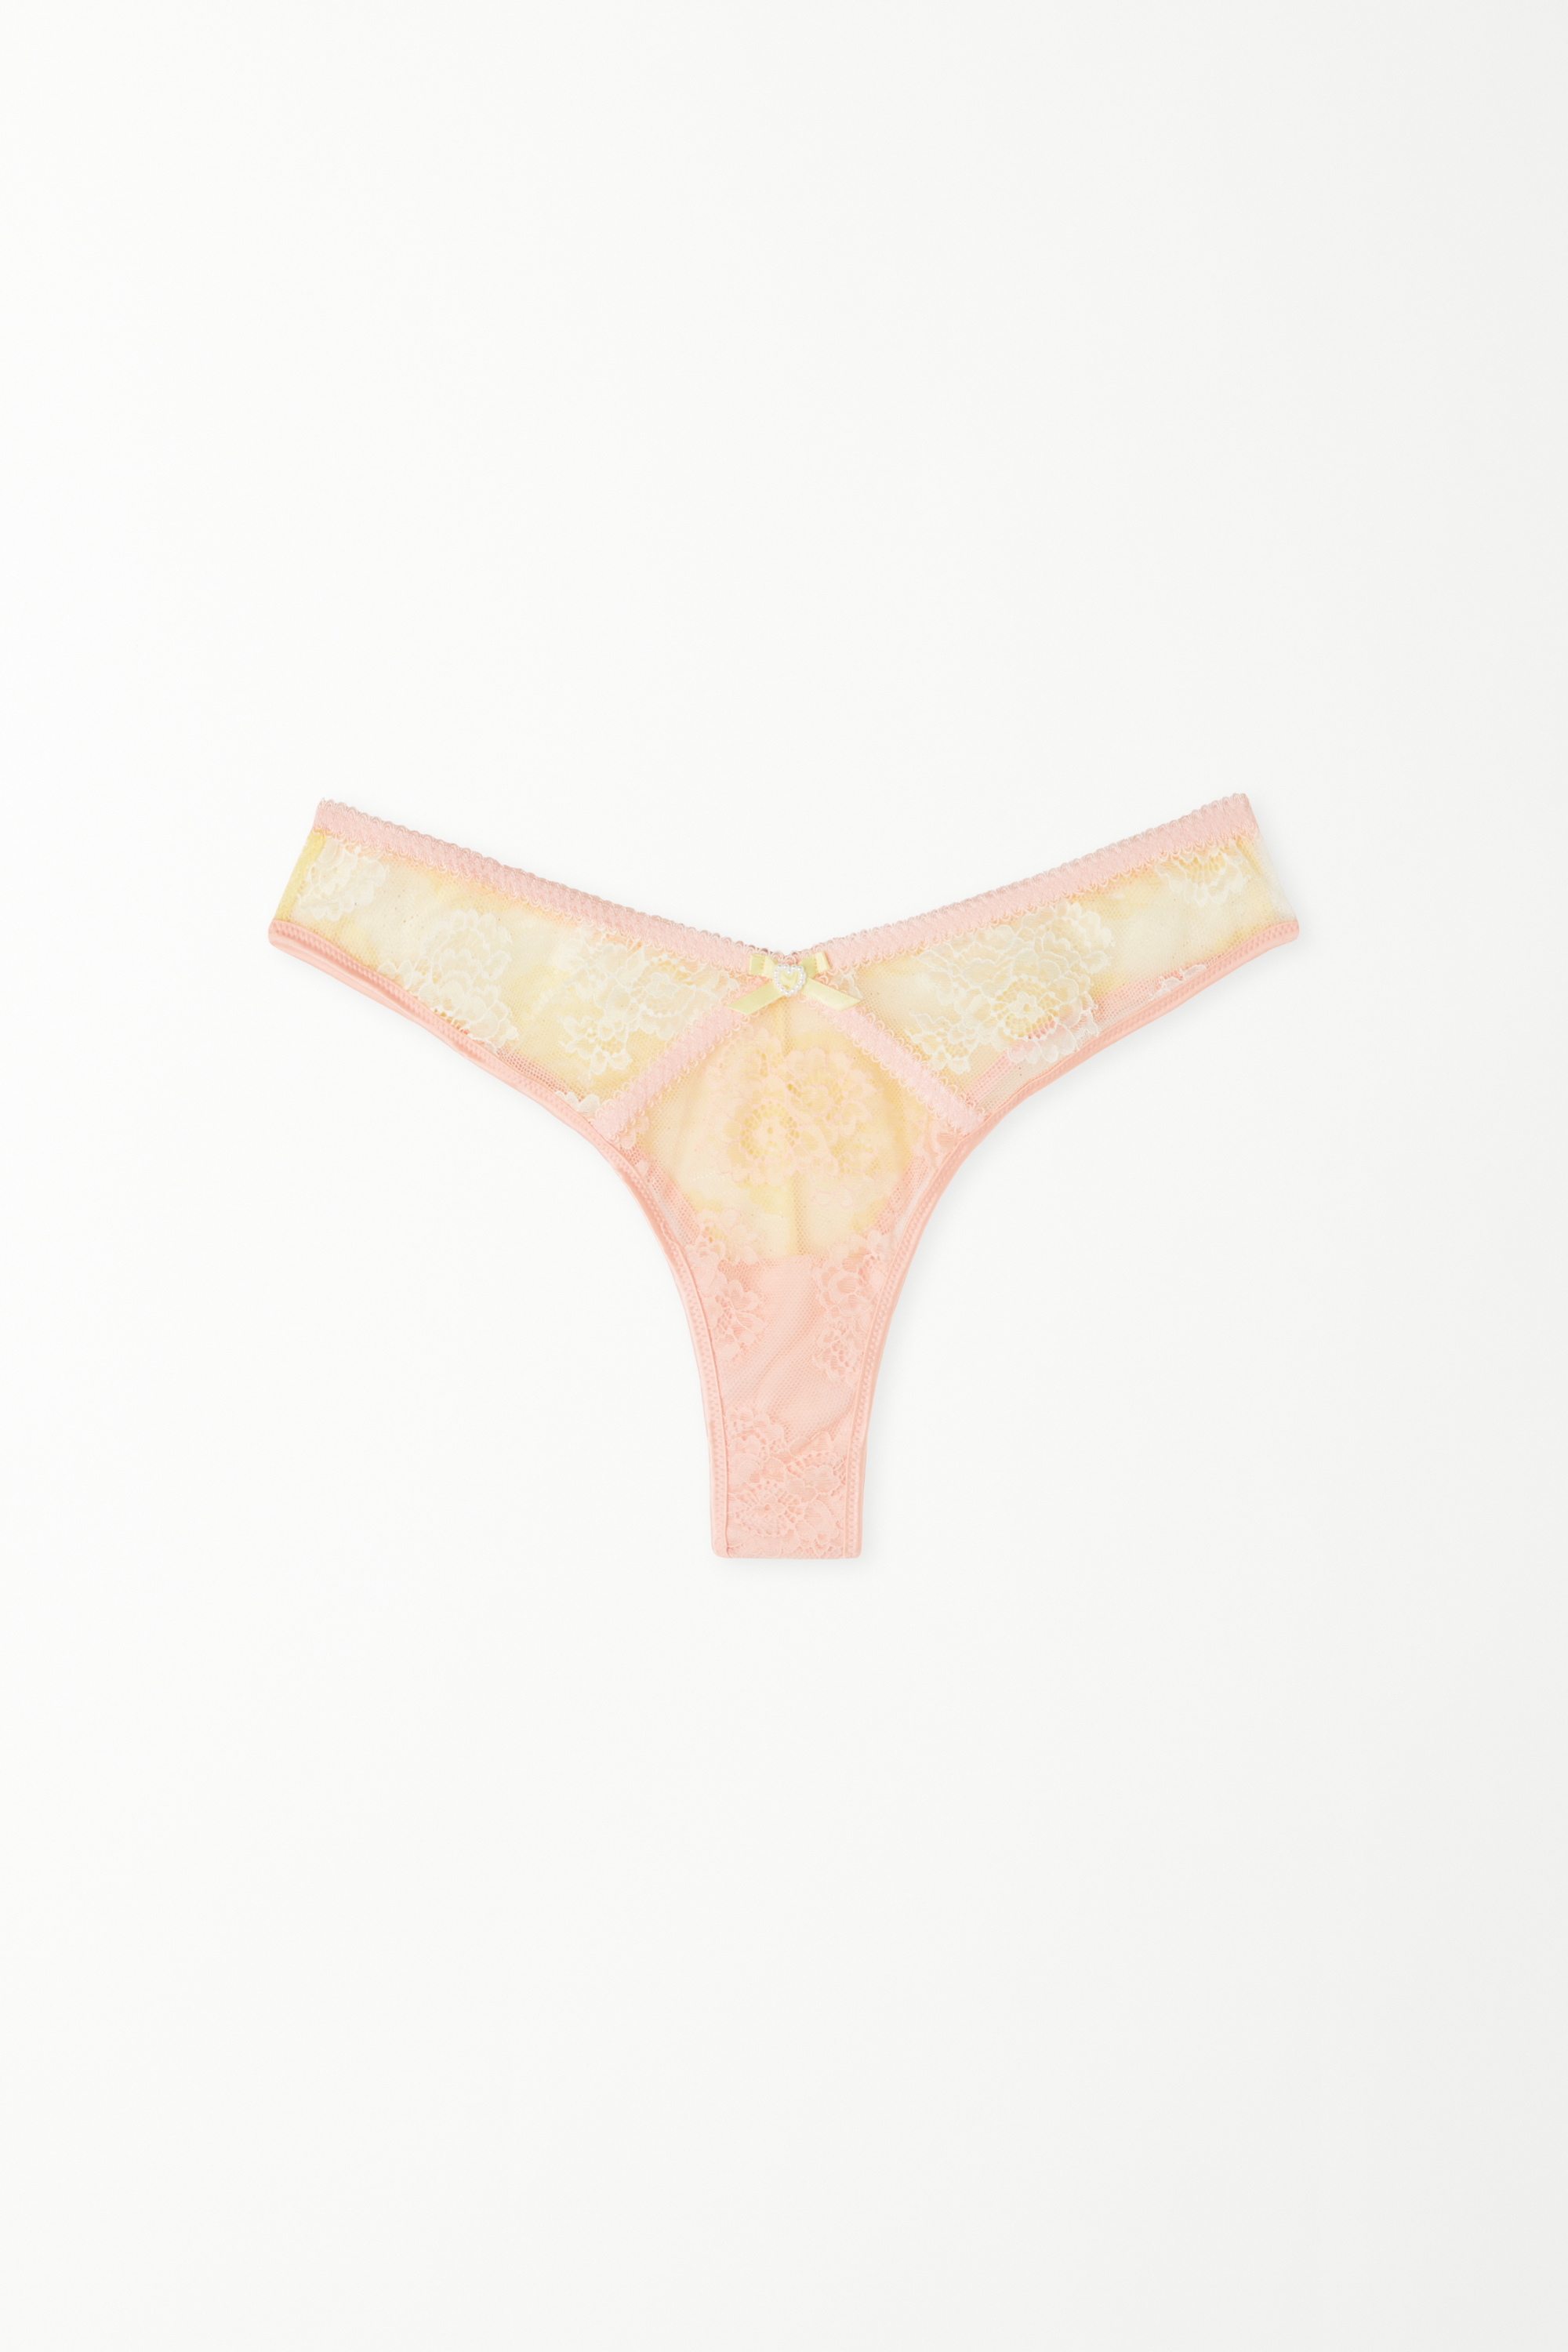 Sunset Lace High-Cut Brazilian Panties